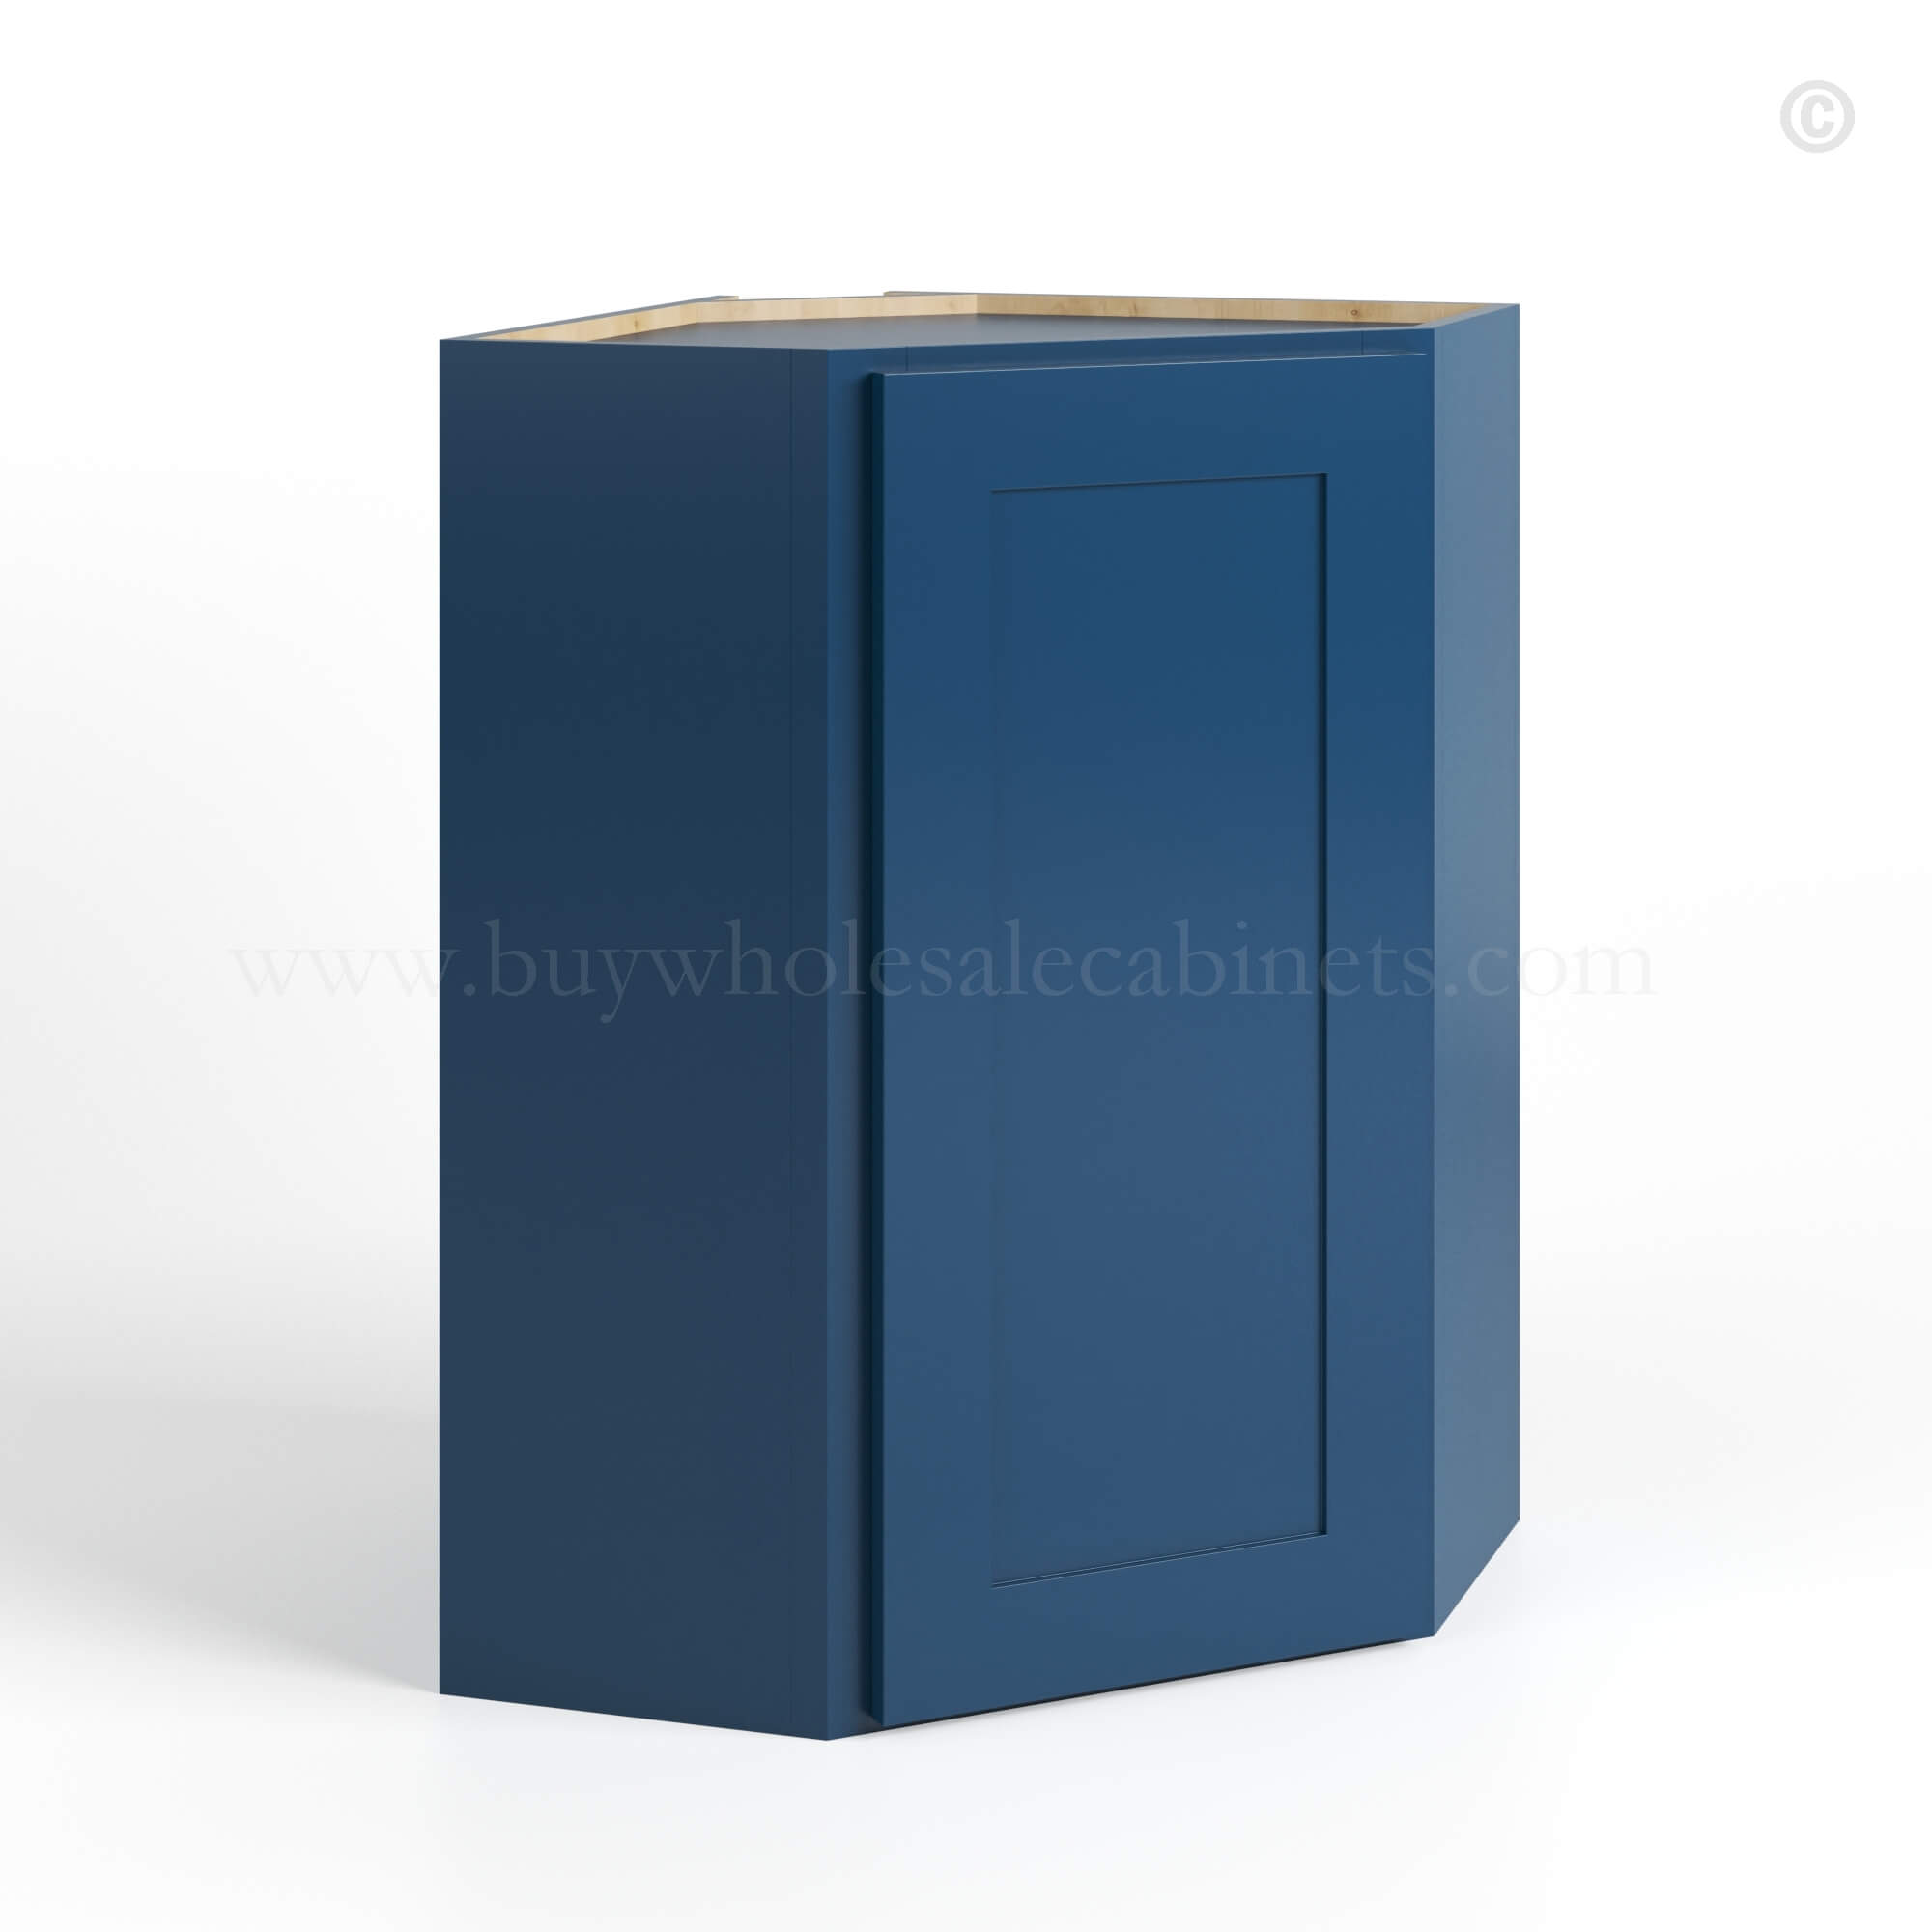 Diagonal Corner Wall Shelf Navy Blue Cabinet, rta cabinets, wholesale cabinets